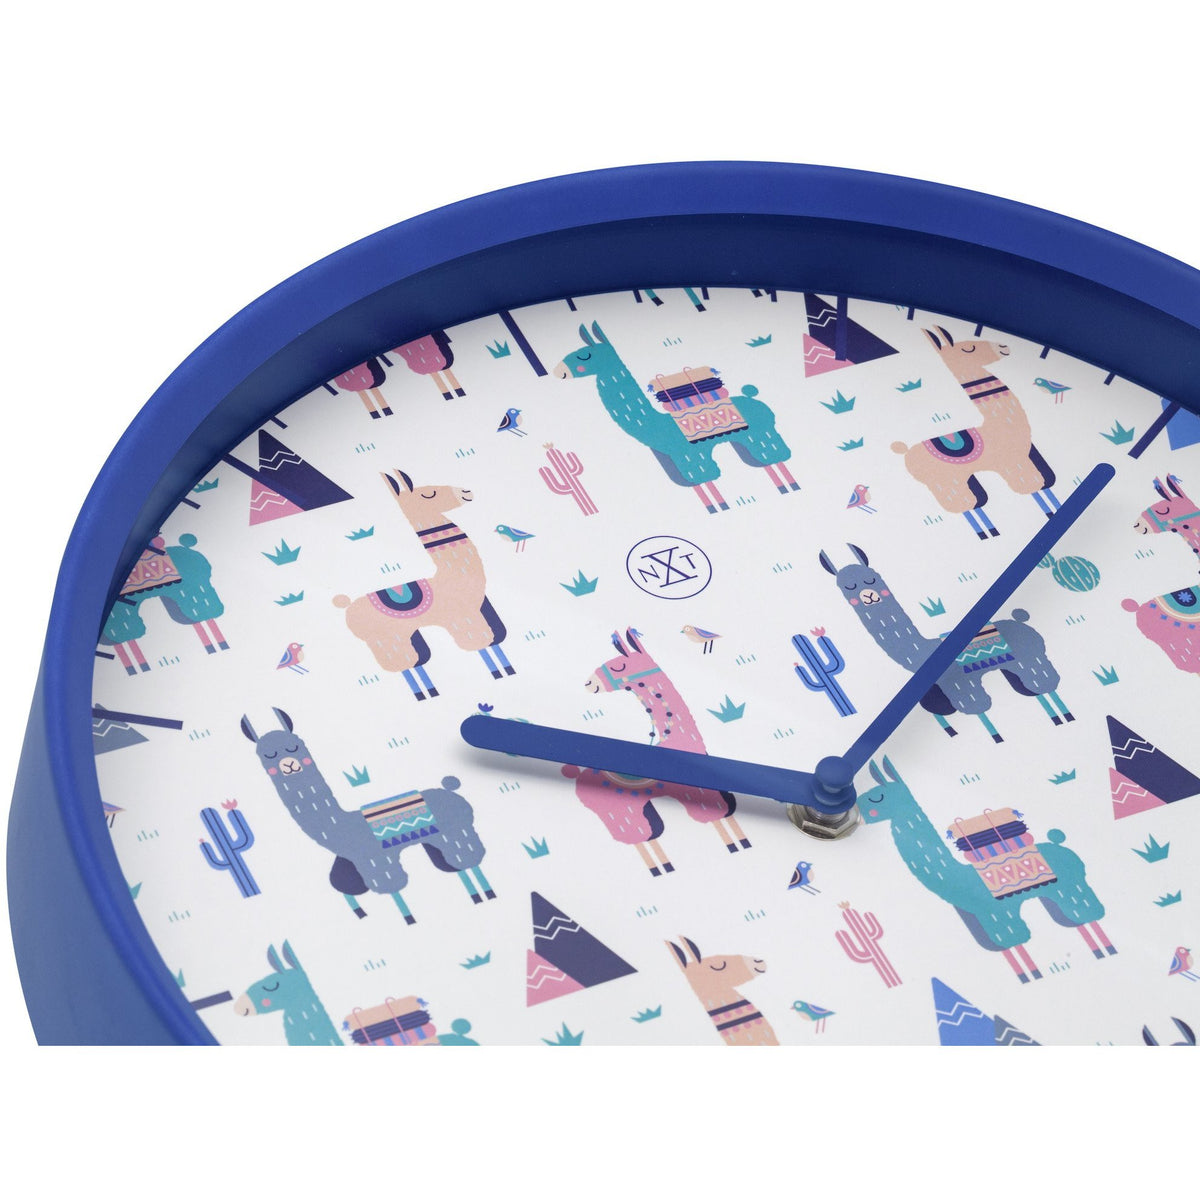 nXt- Wall clock - Ø 30 cm - Plastic - White - &#39;Alpaca&#39;